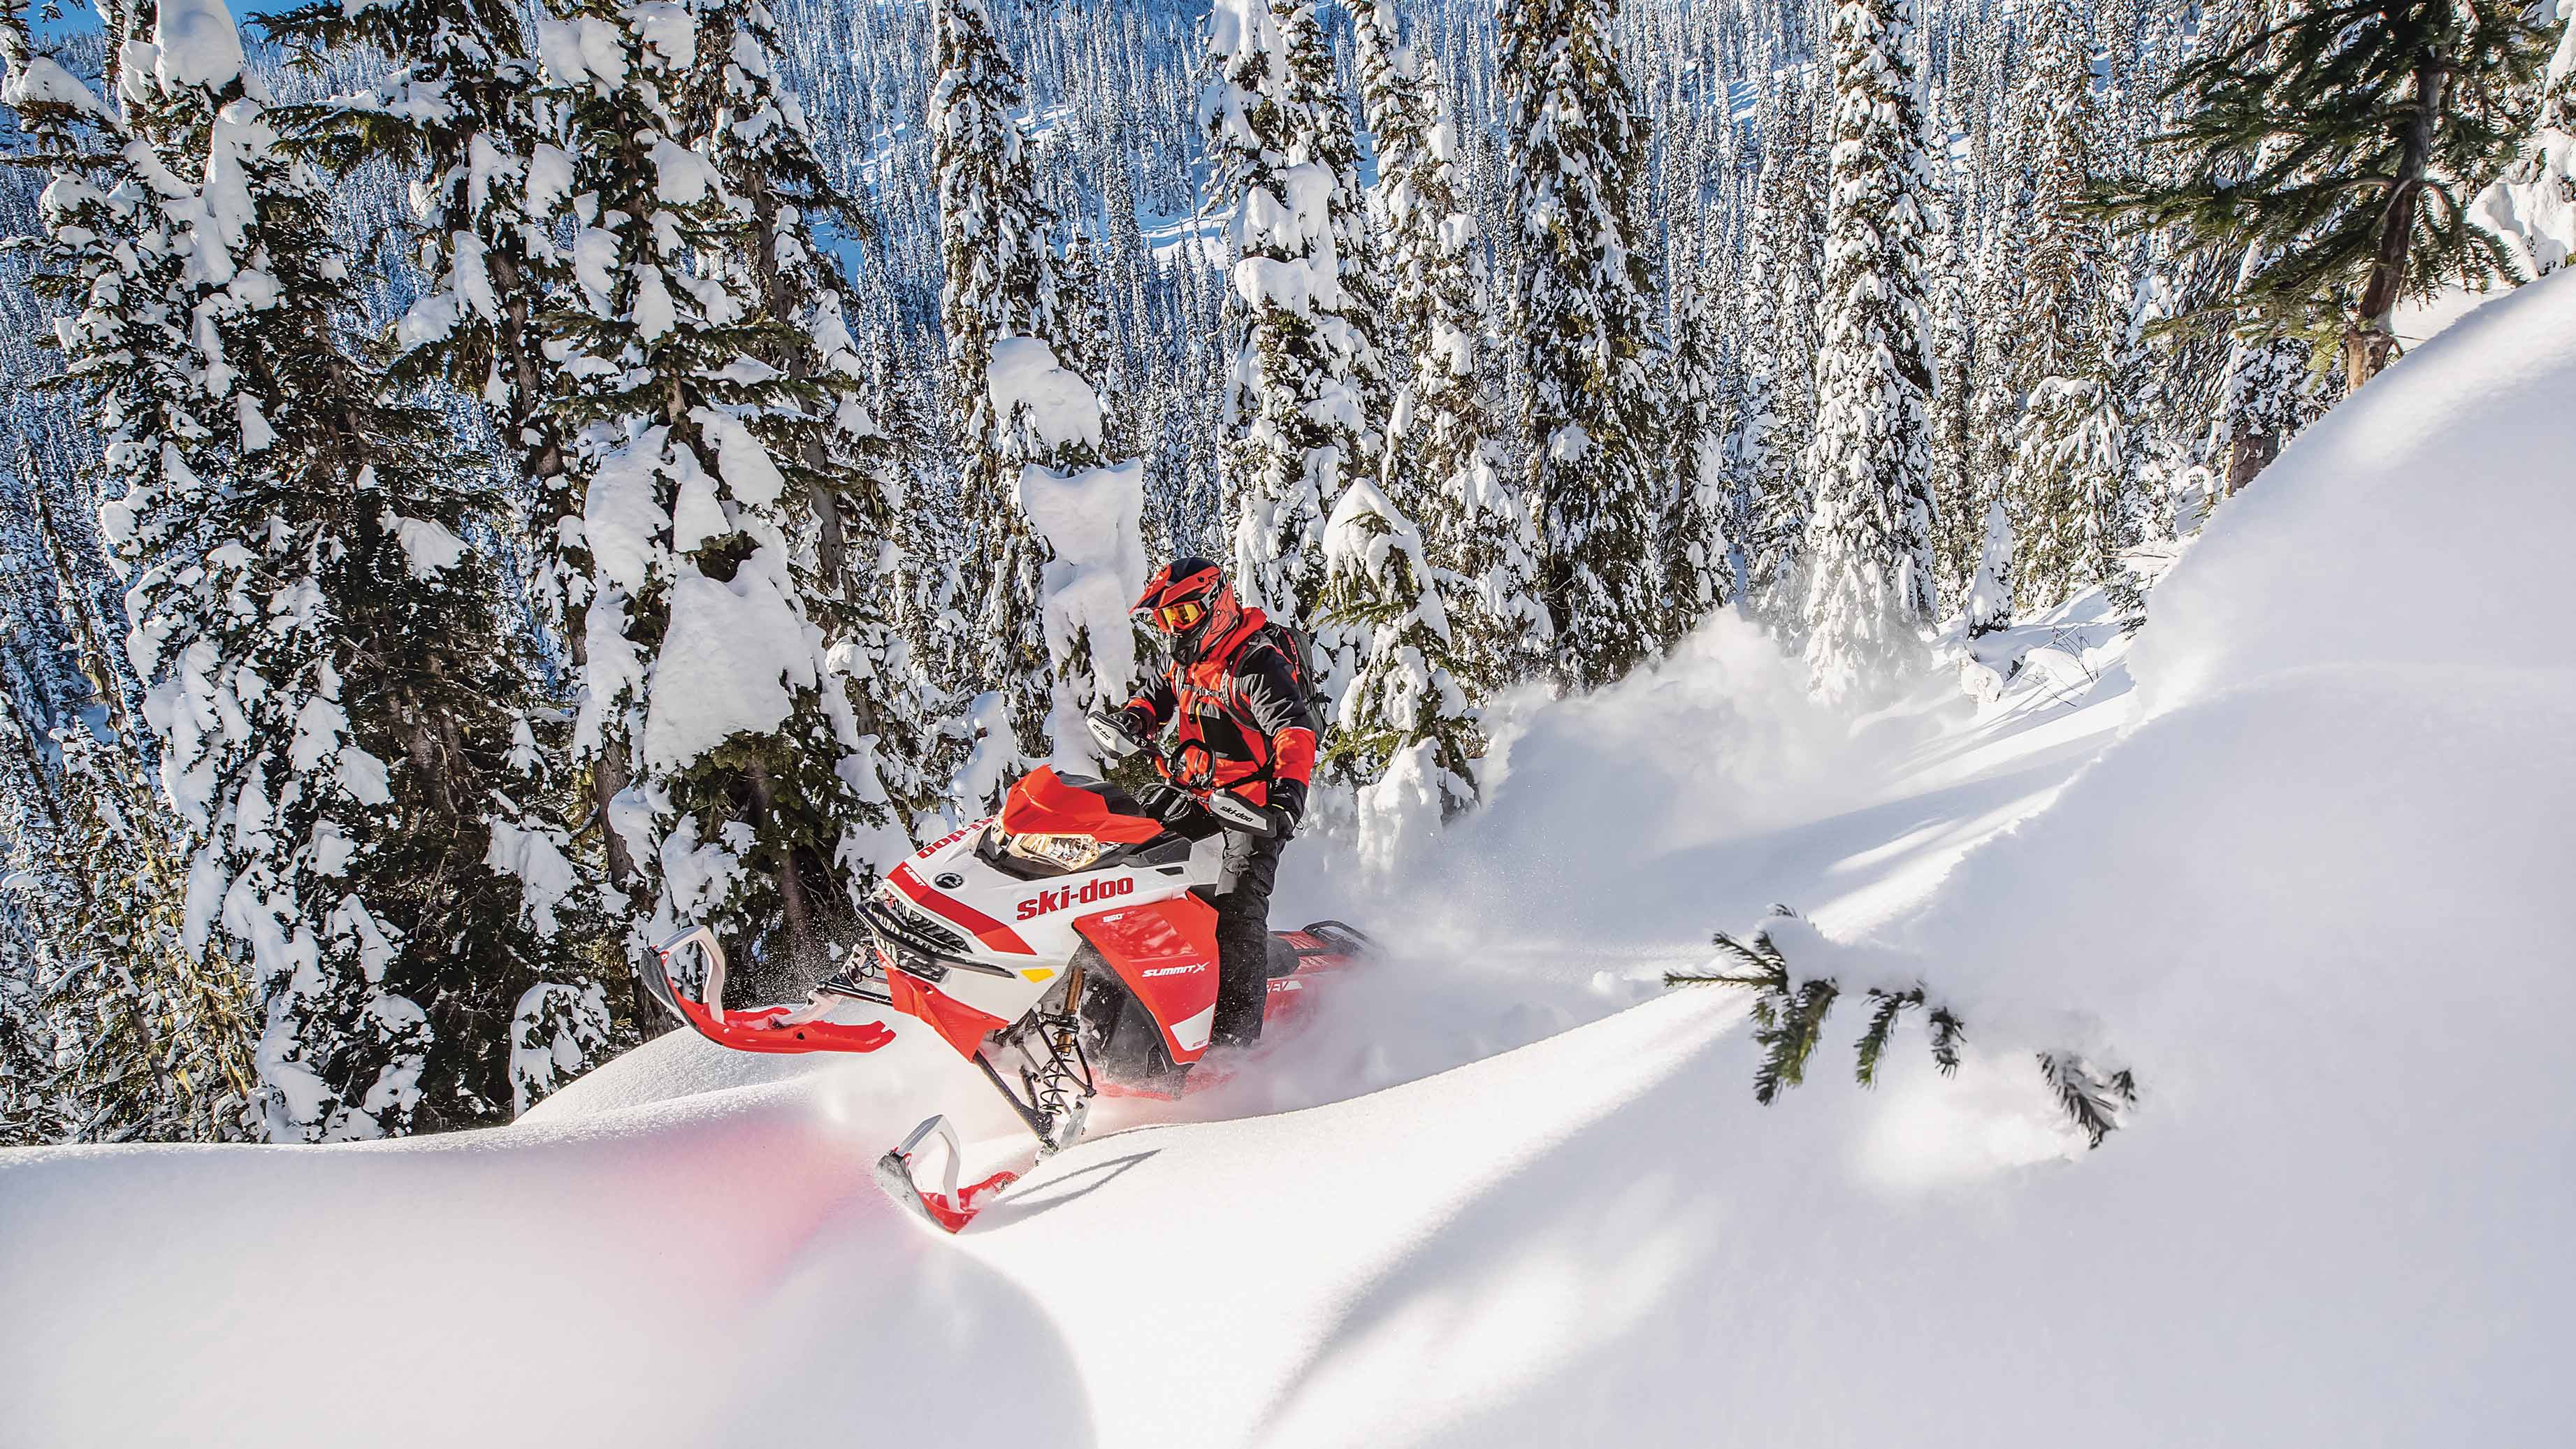 Rider enjoying Backcountry with a Ski-Doo Summit Expert